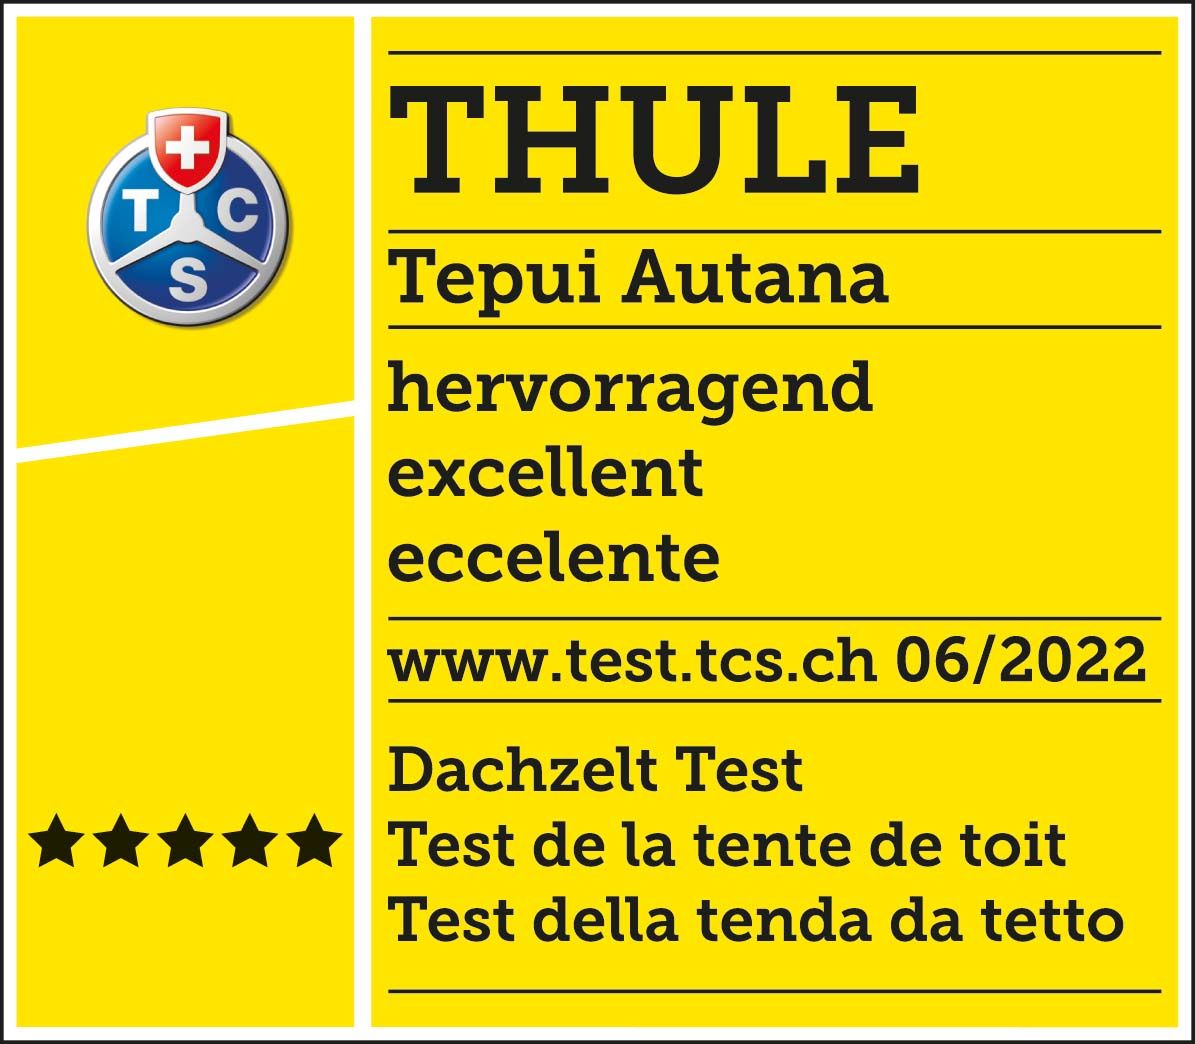 TCS Test win - Thule Tepui Autana